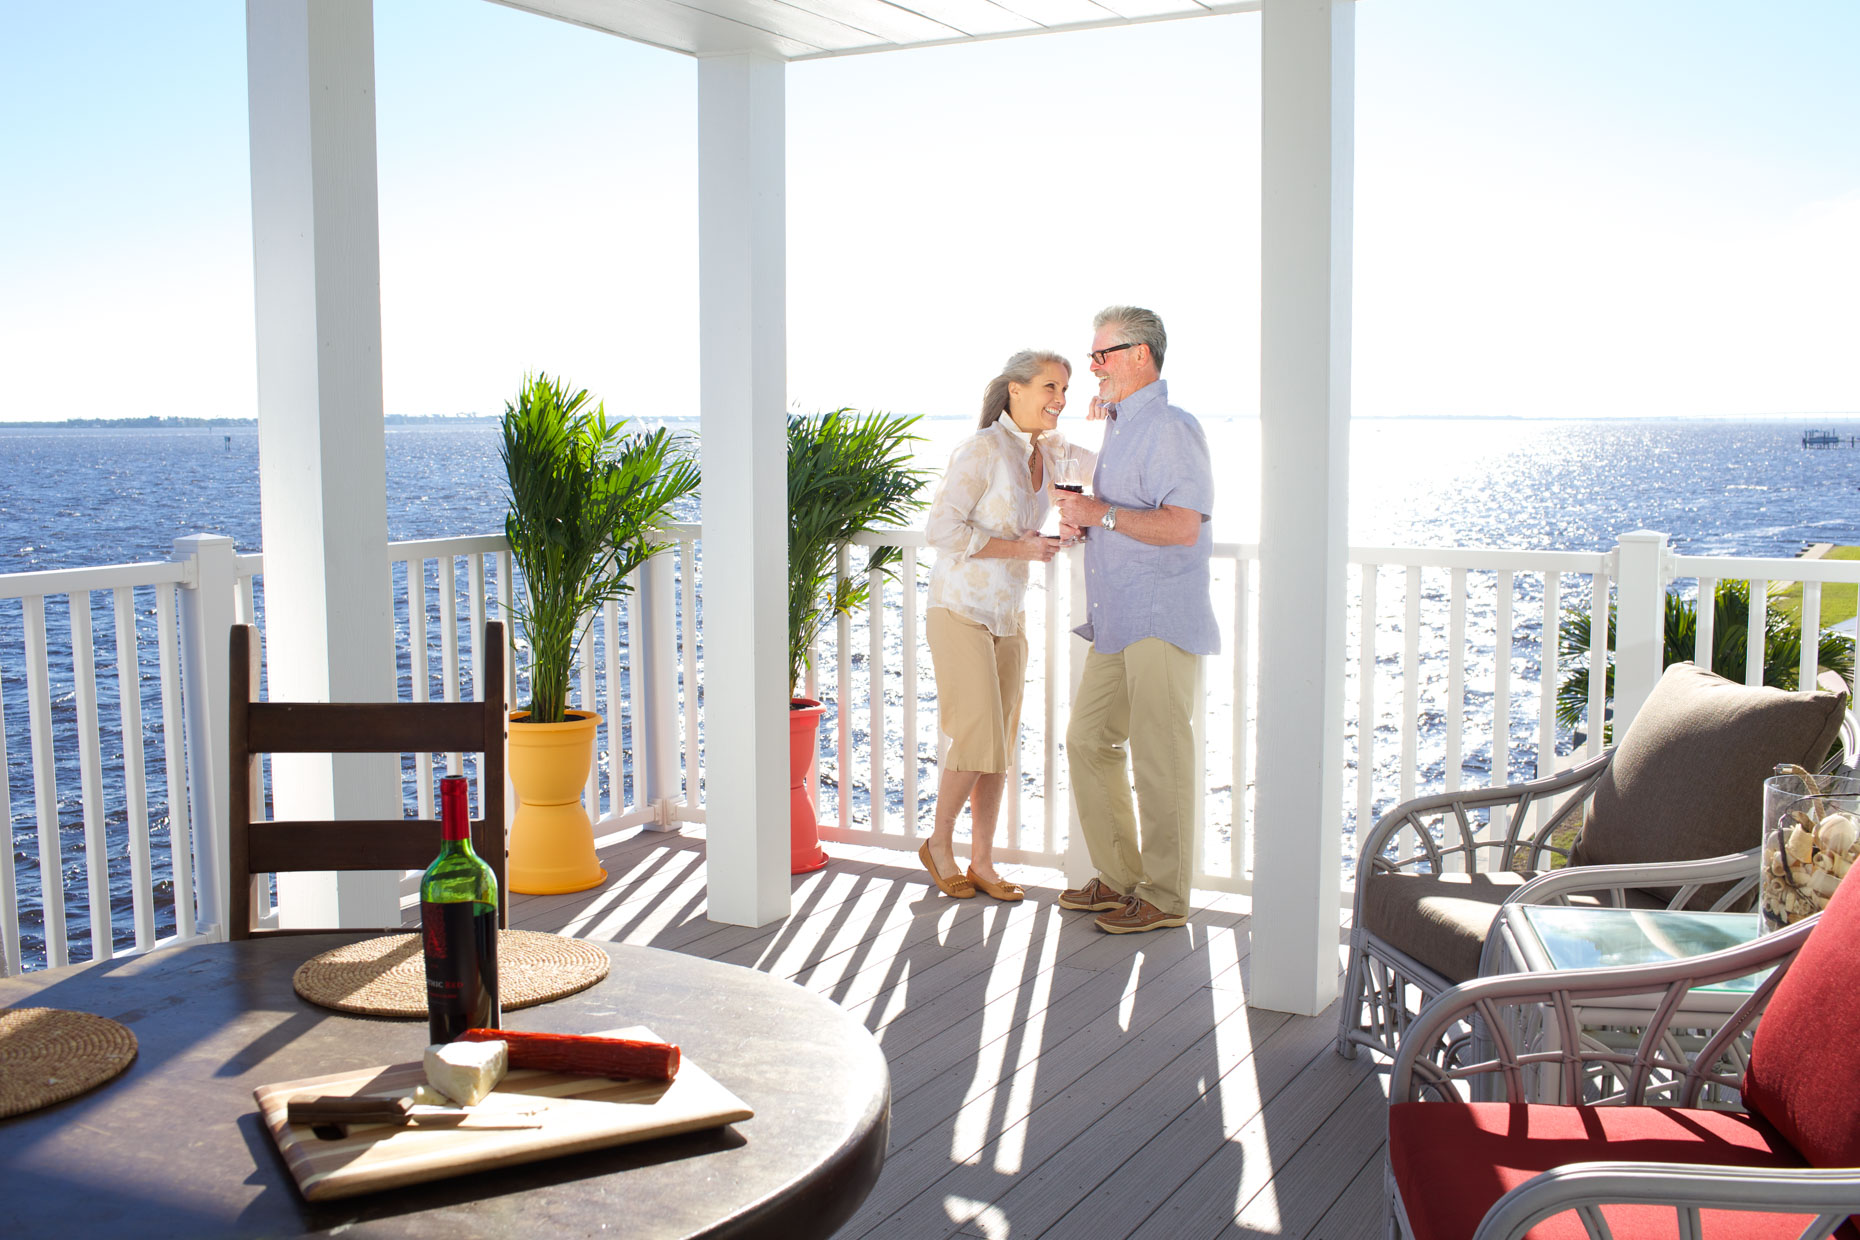 _MG_4096_RobertHolland_senior couple on waterfront patio of modular home